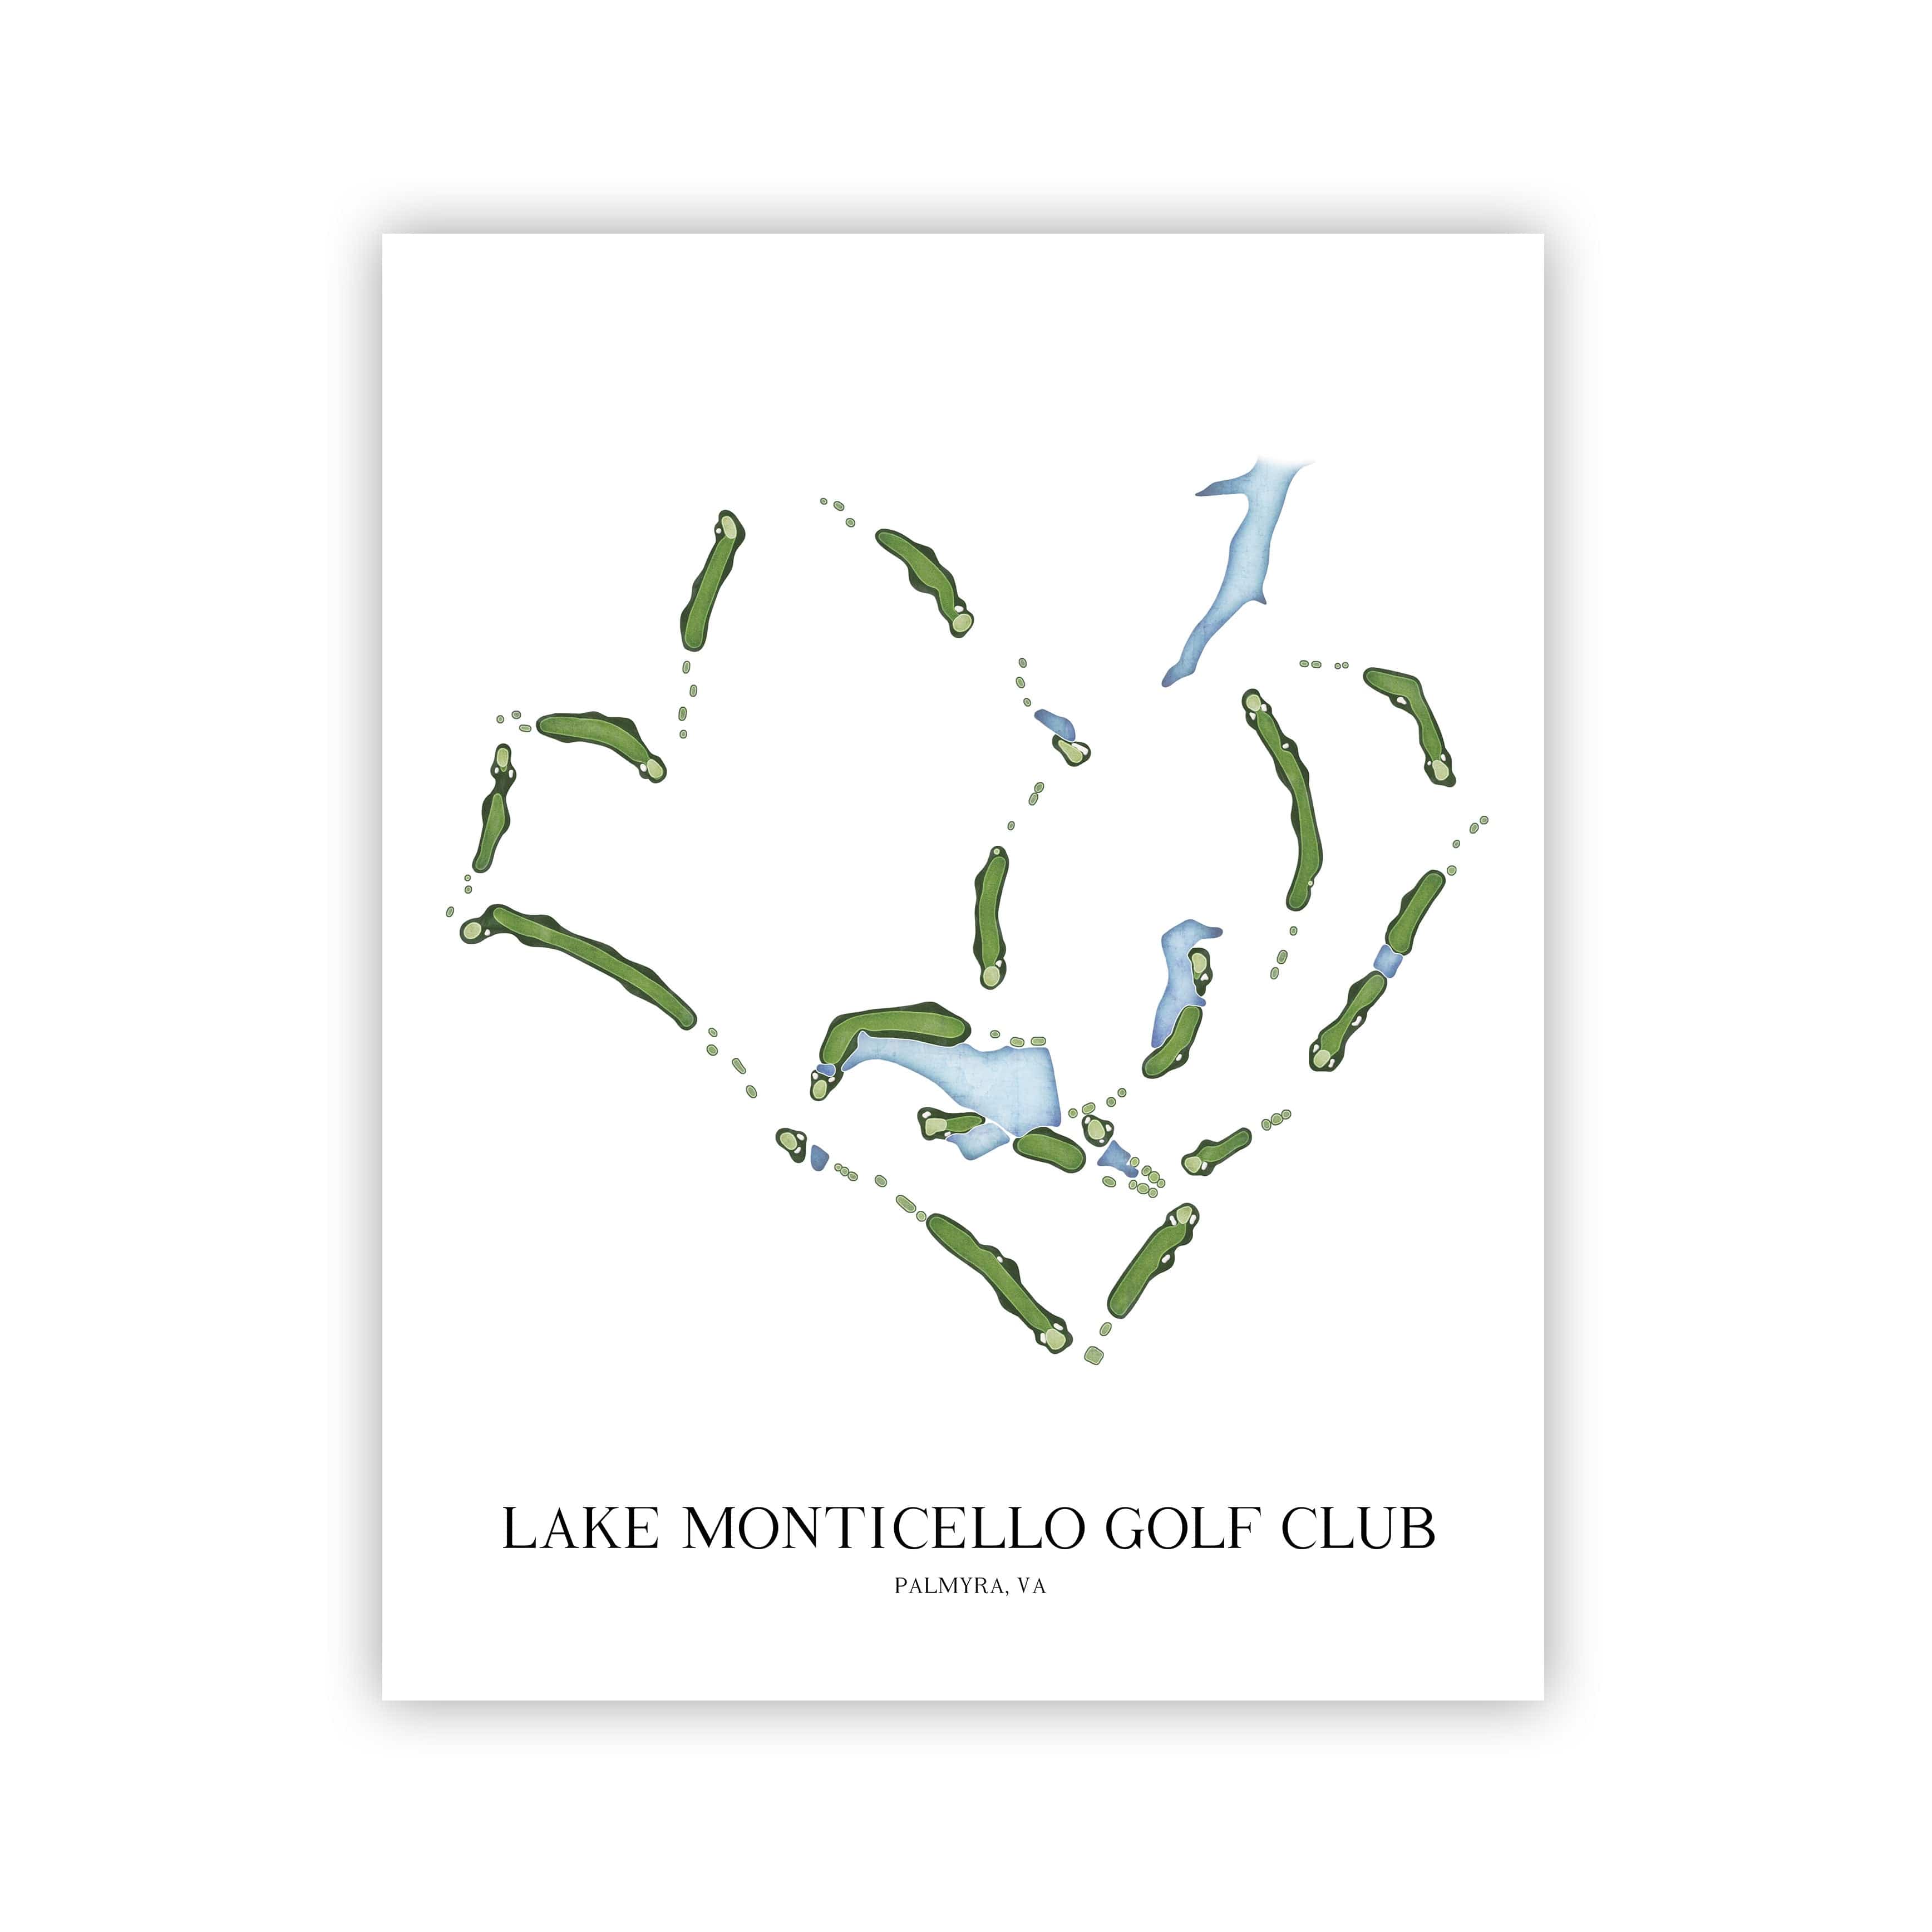 The 19th Hole Golf Shop - Golf Course Prints -  Lake Monticello Golf Club Golf Course Map